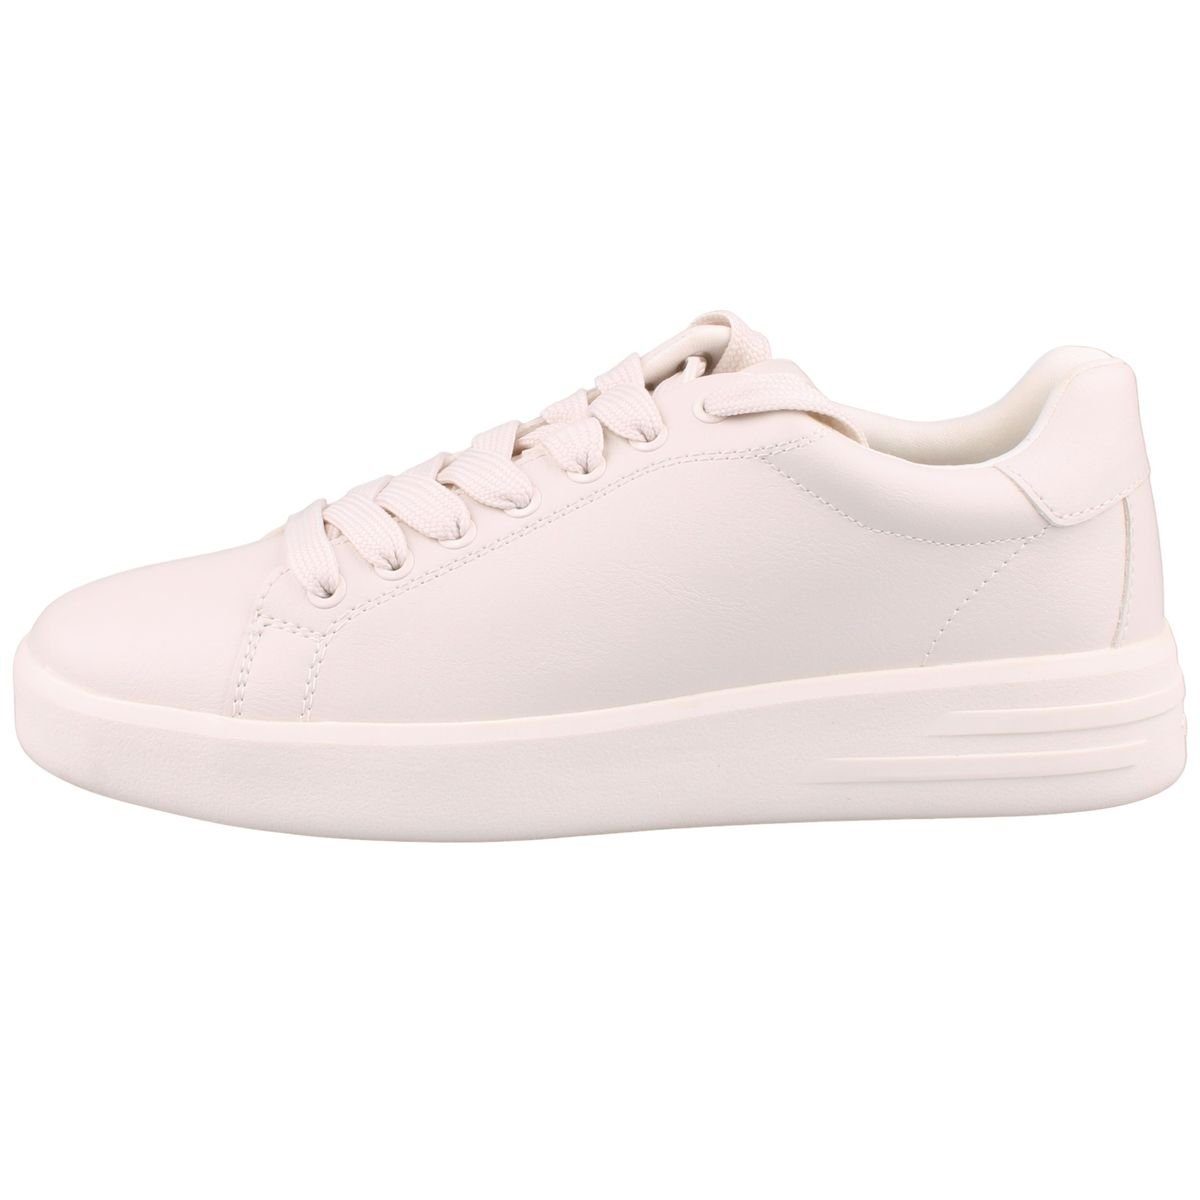 Tamaris 1-23750-20/146 Sneaker Weiß UNI) (WHITE